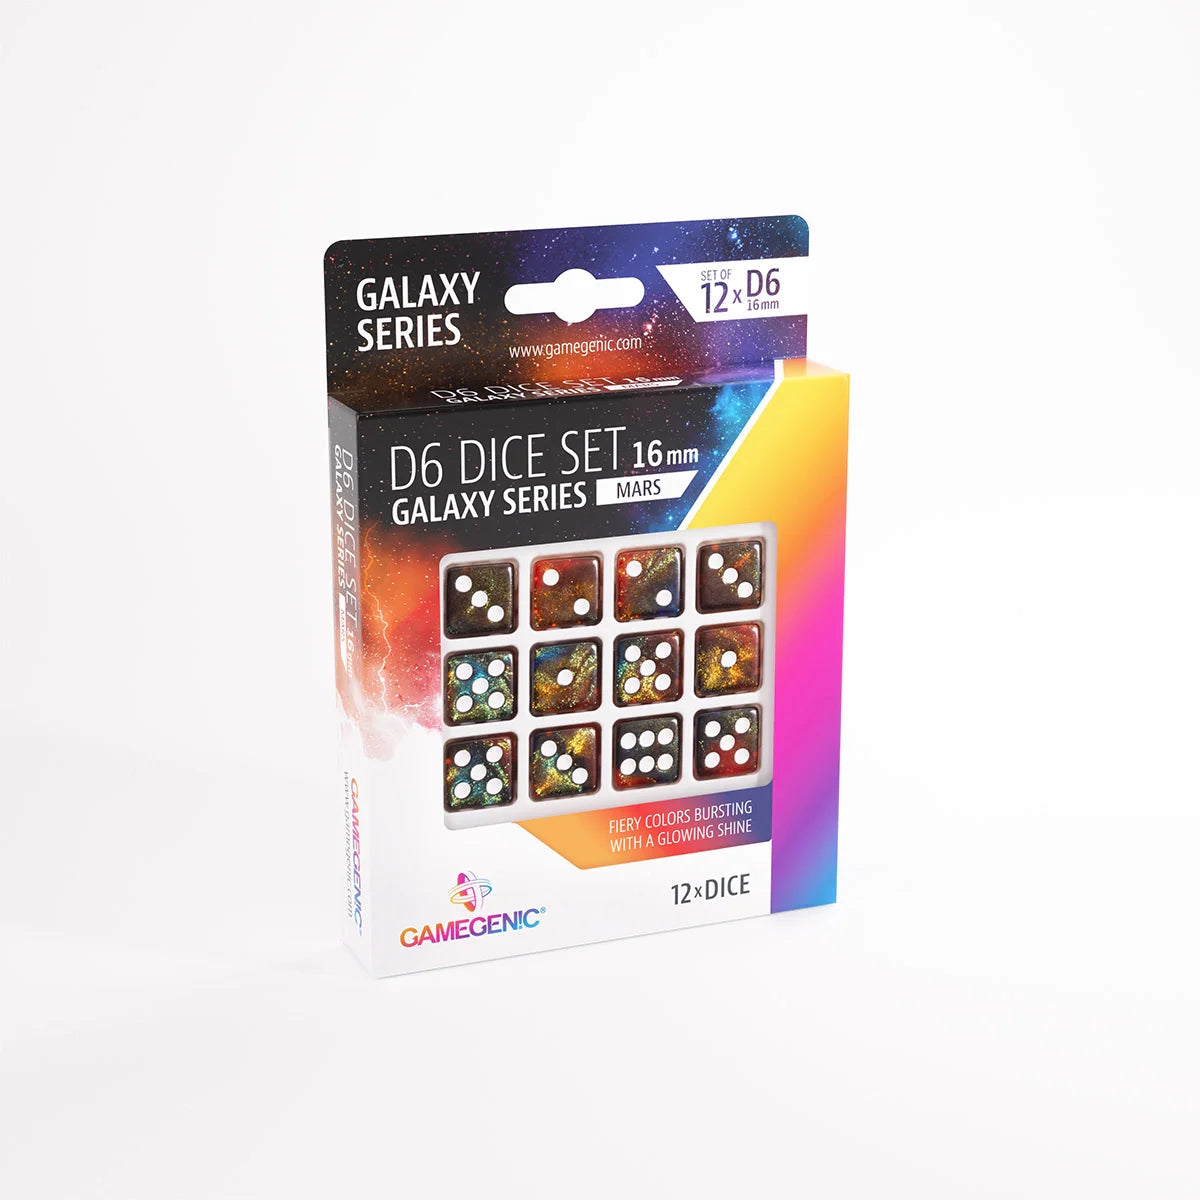 Gamegenic D6 Dice Set - Galaxy Series - Mars (12x 16mm D6)